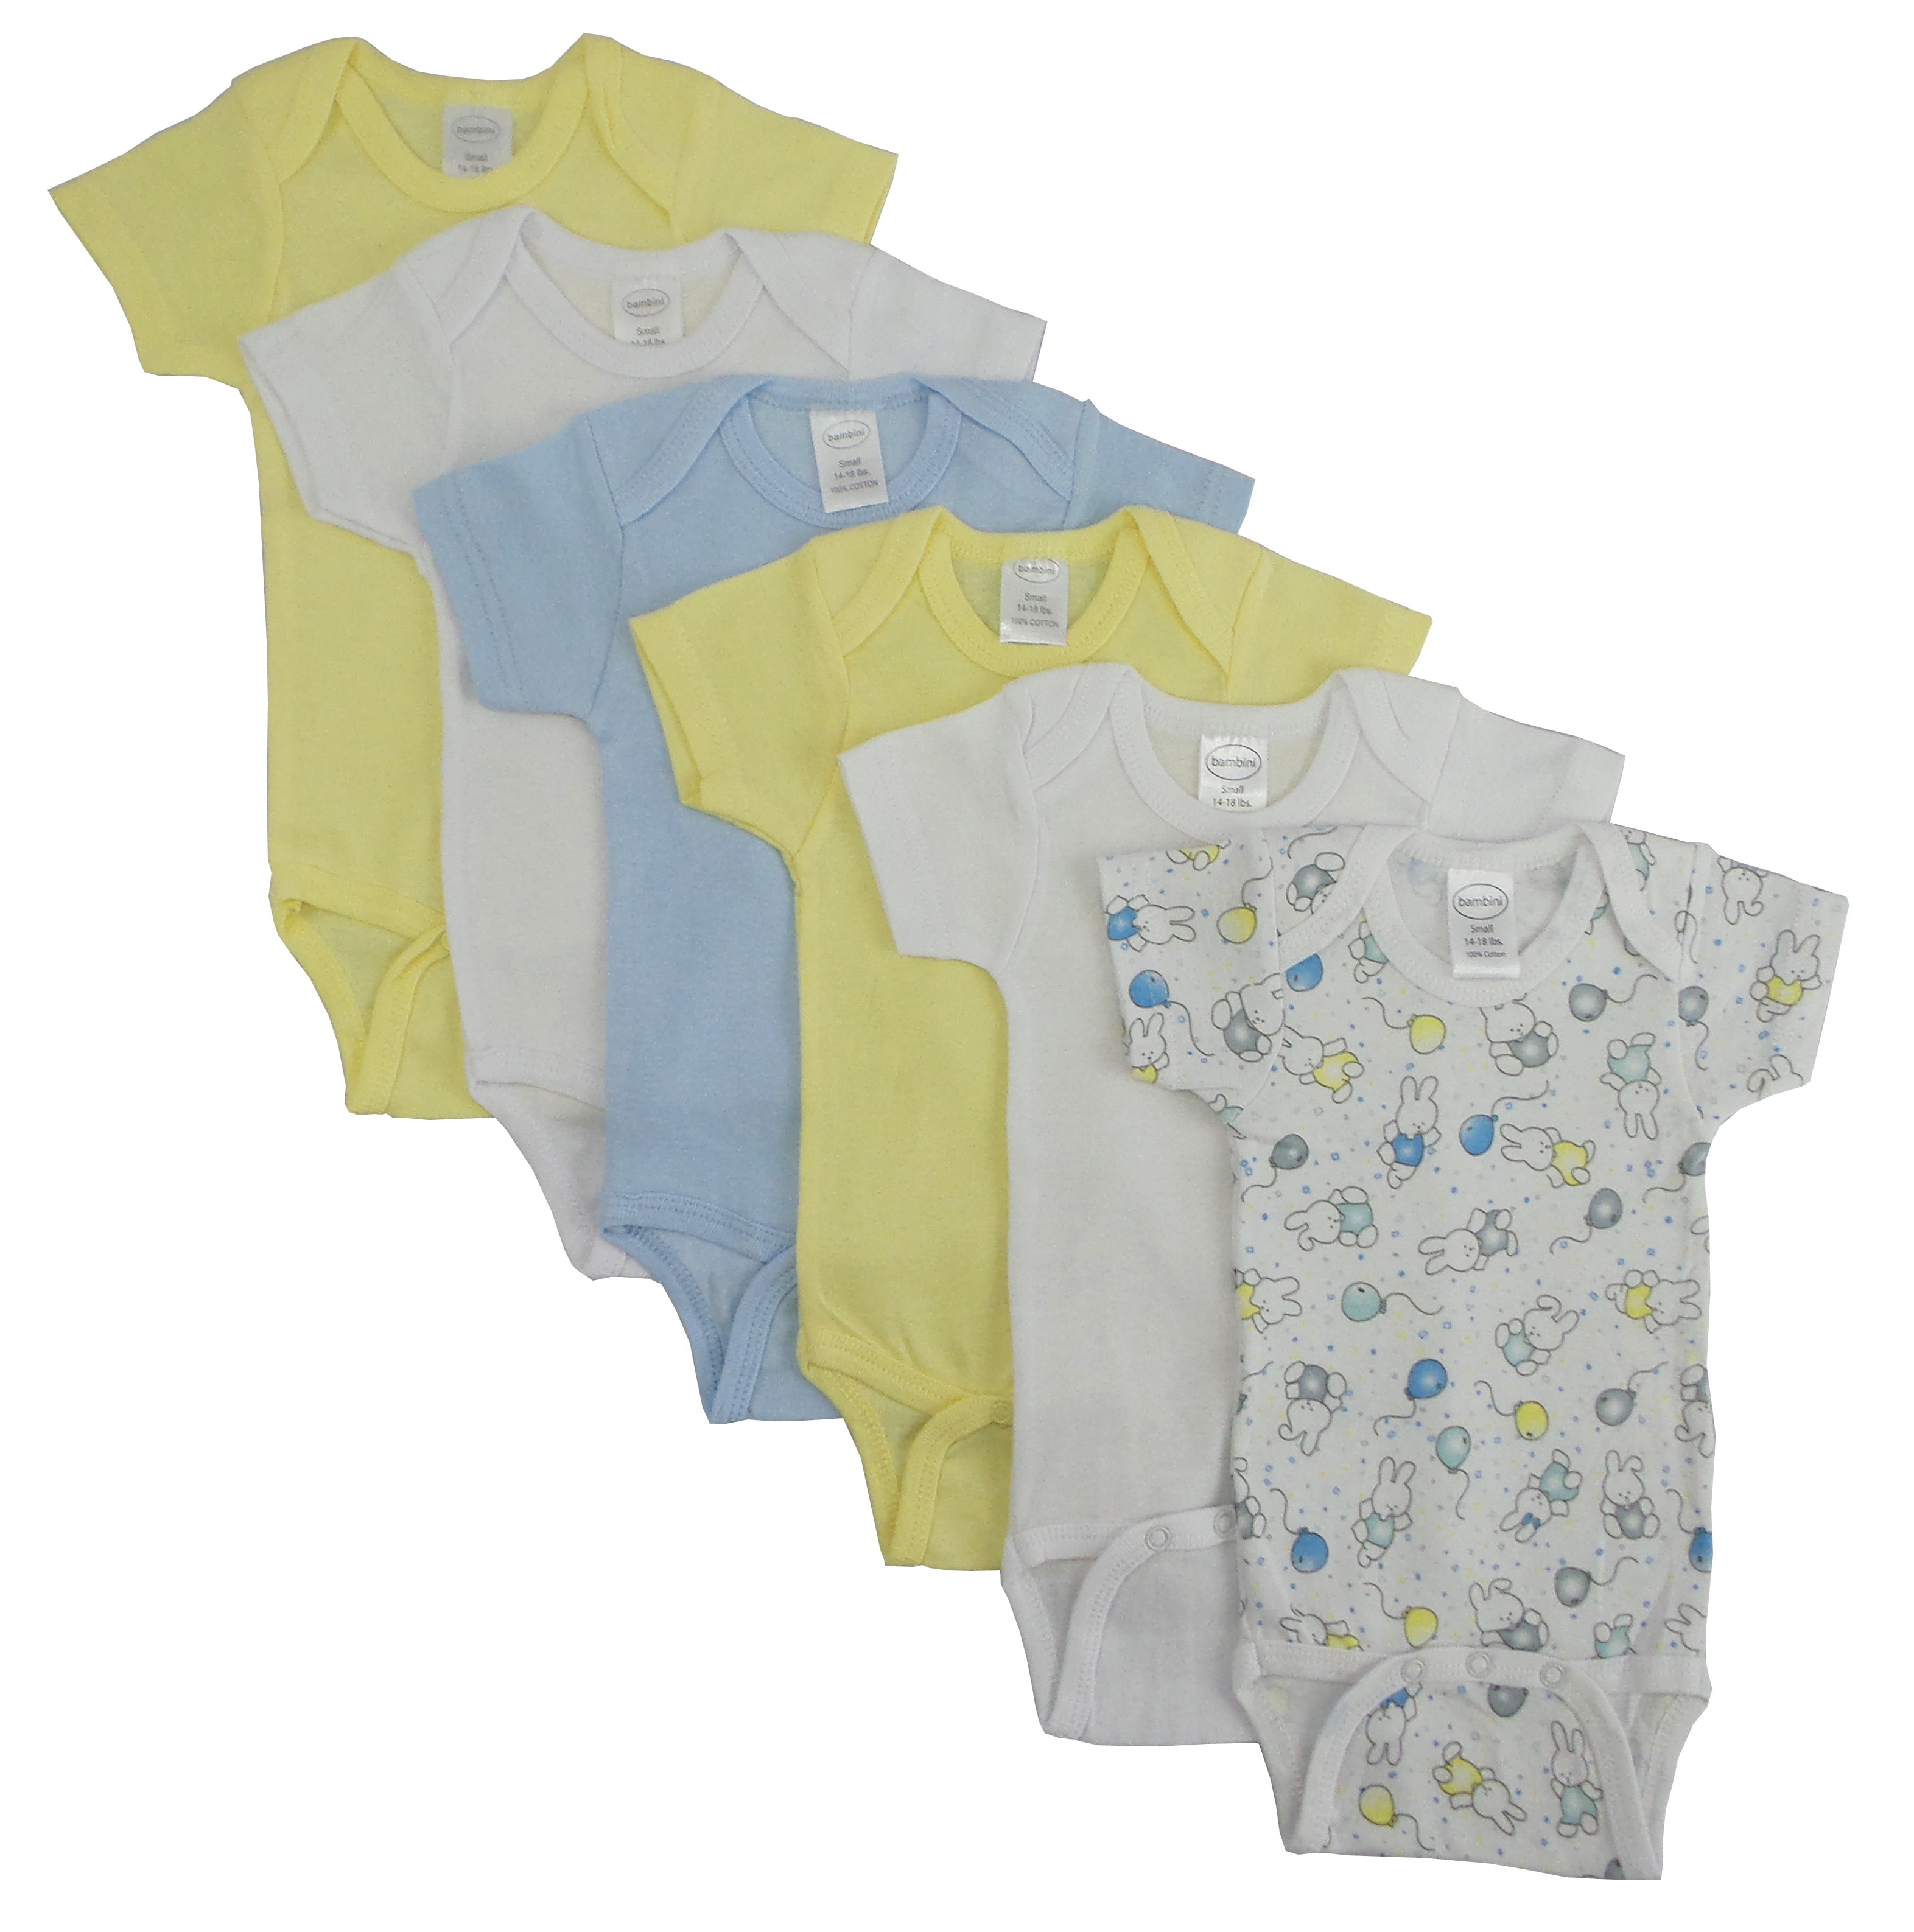 Cs-002m-004m Pastel Boys Short Sleeve With Printed, Assorted - Medium